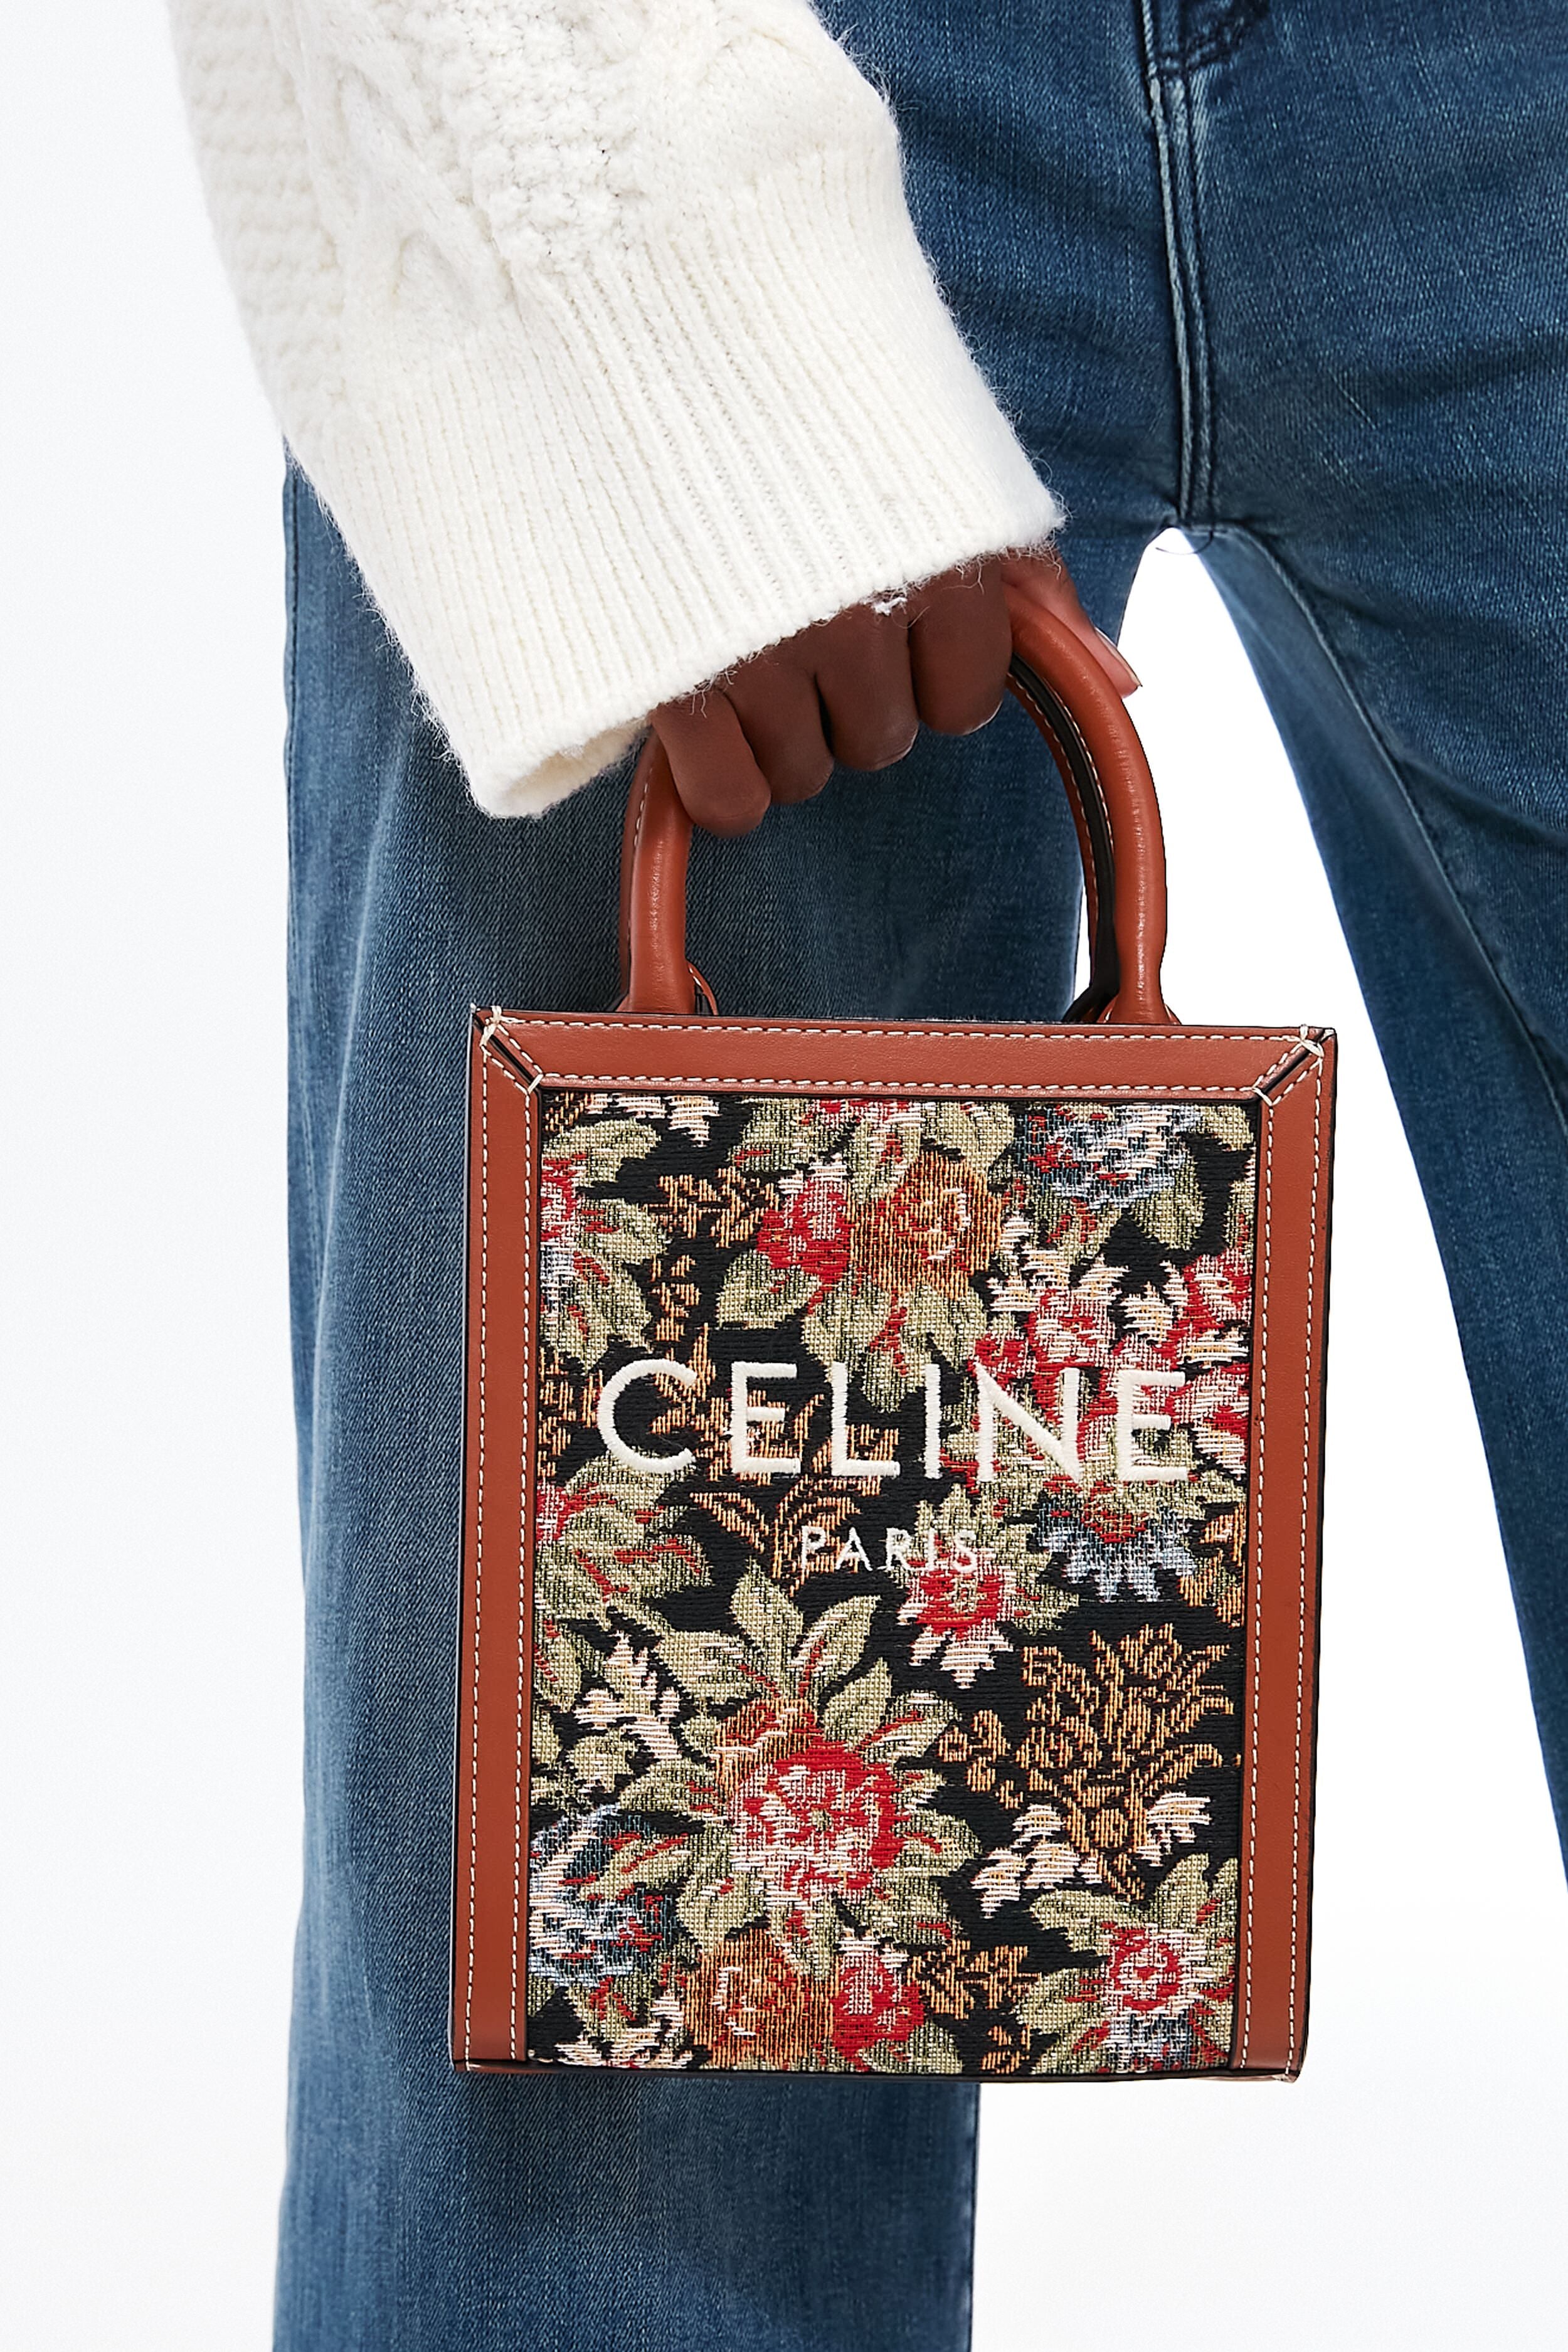 STYLE Edit: How Celine's timeless Triomphe handbag stole the show